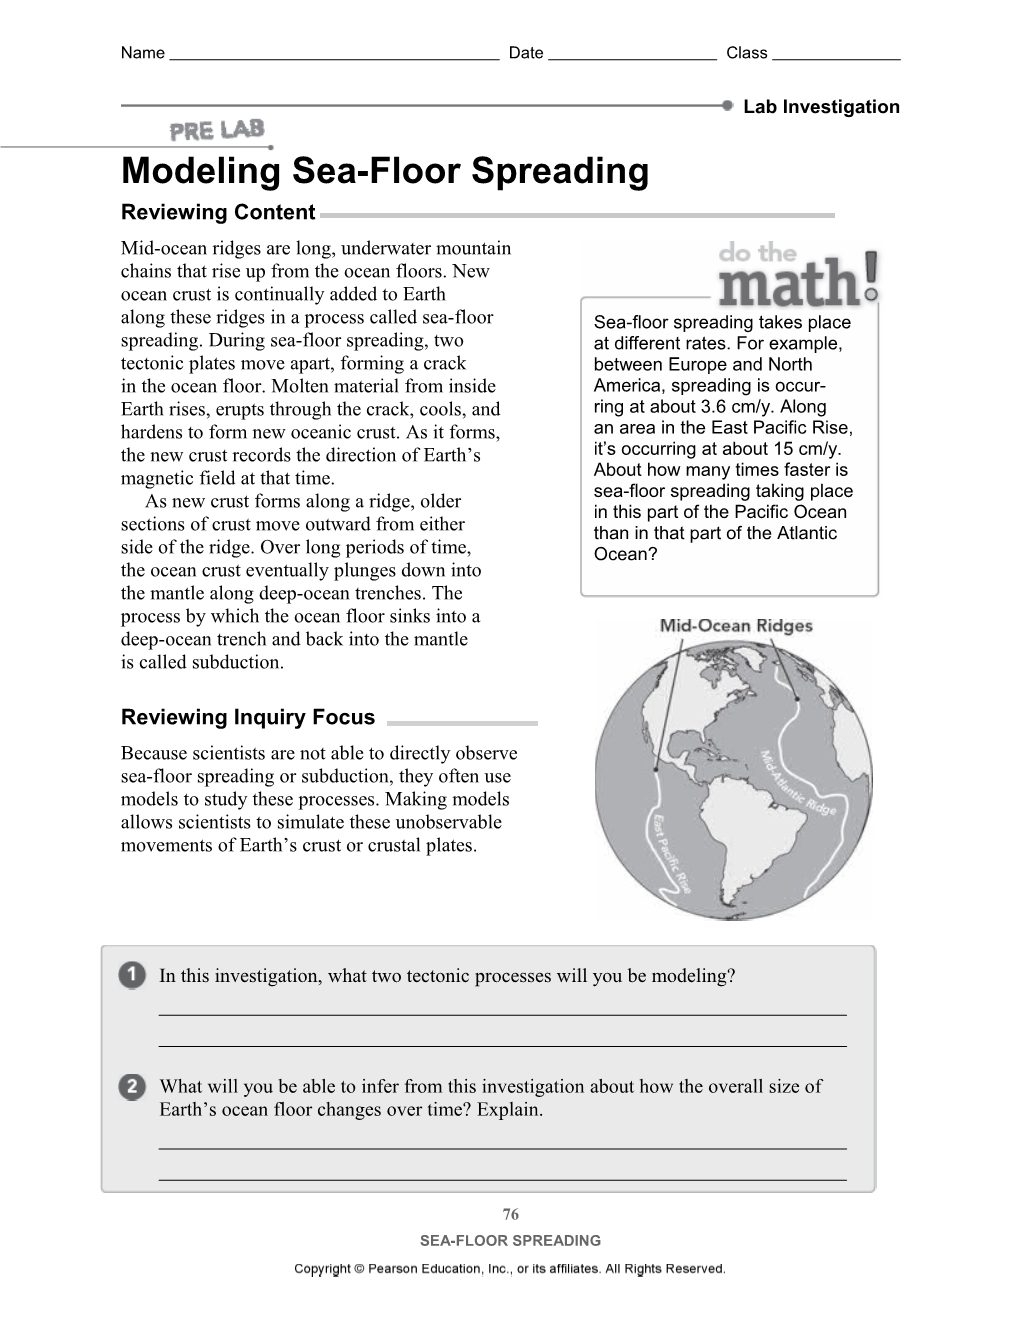 Modeling Sea-Floor Spreading